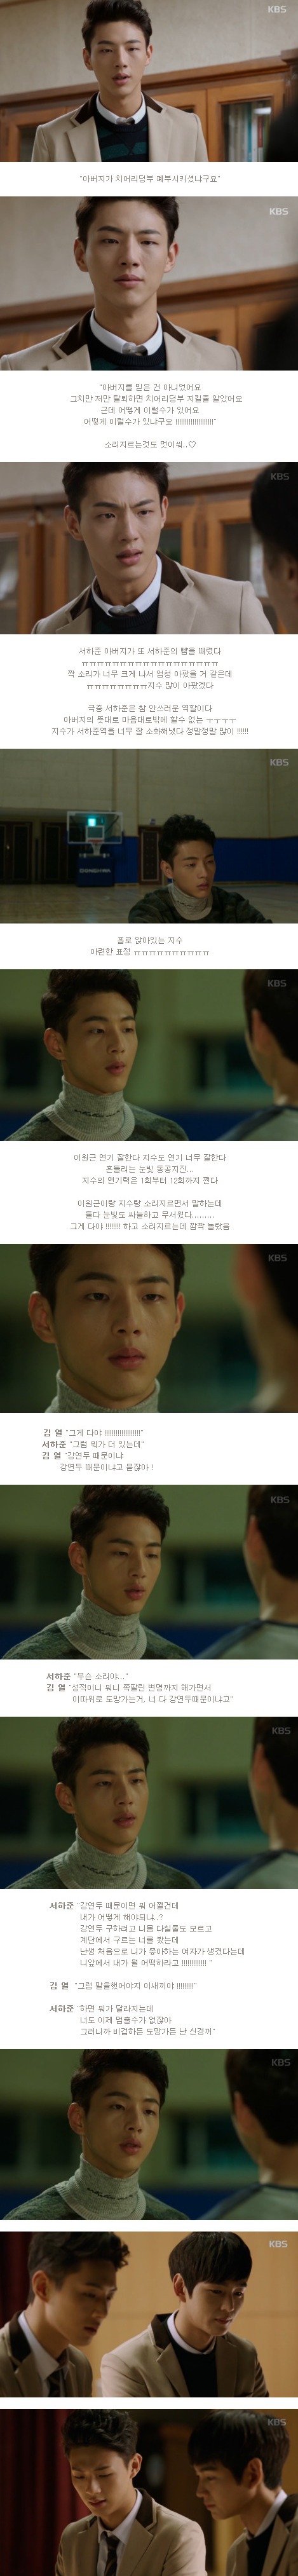 episode 12 captures for the Korean drama 'Cheeky Go Go'